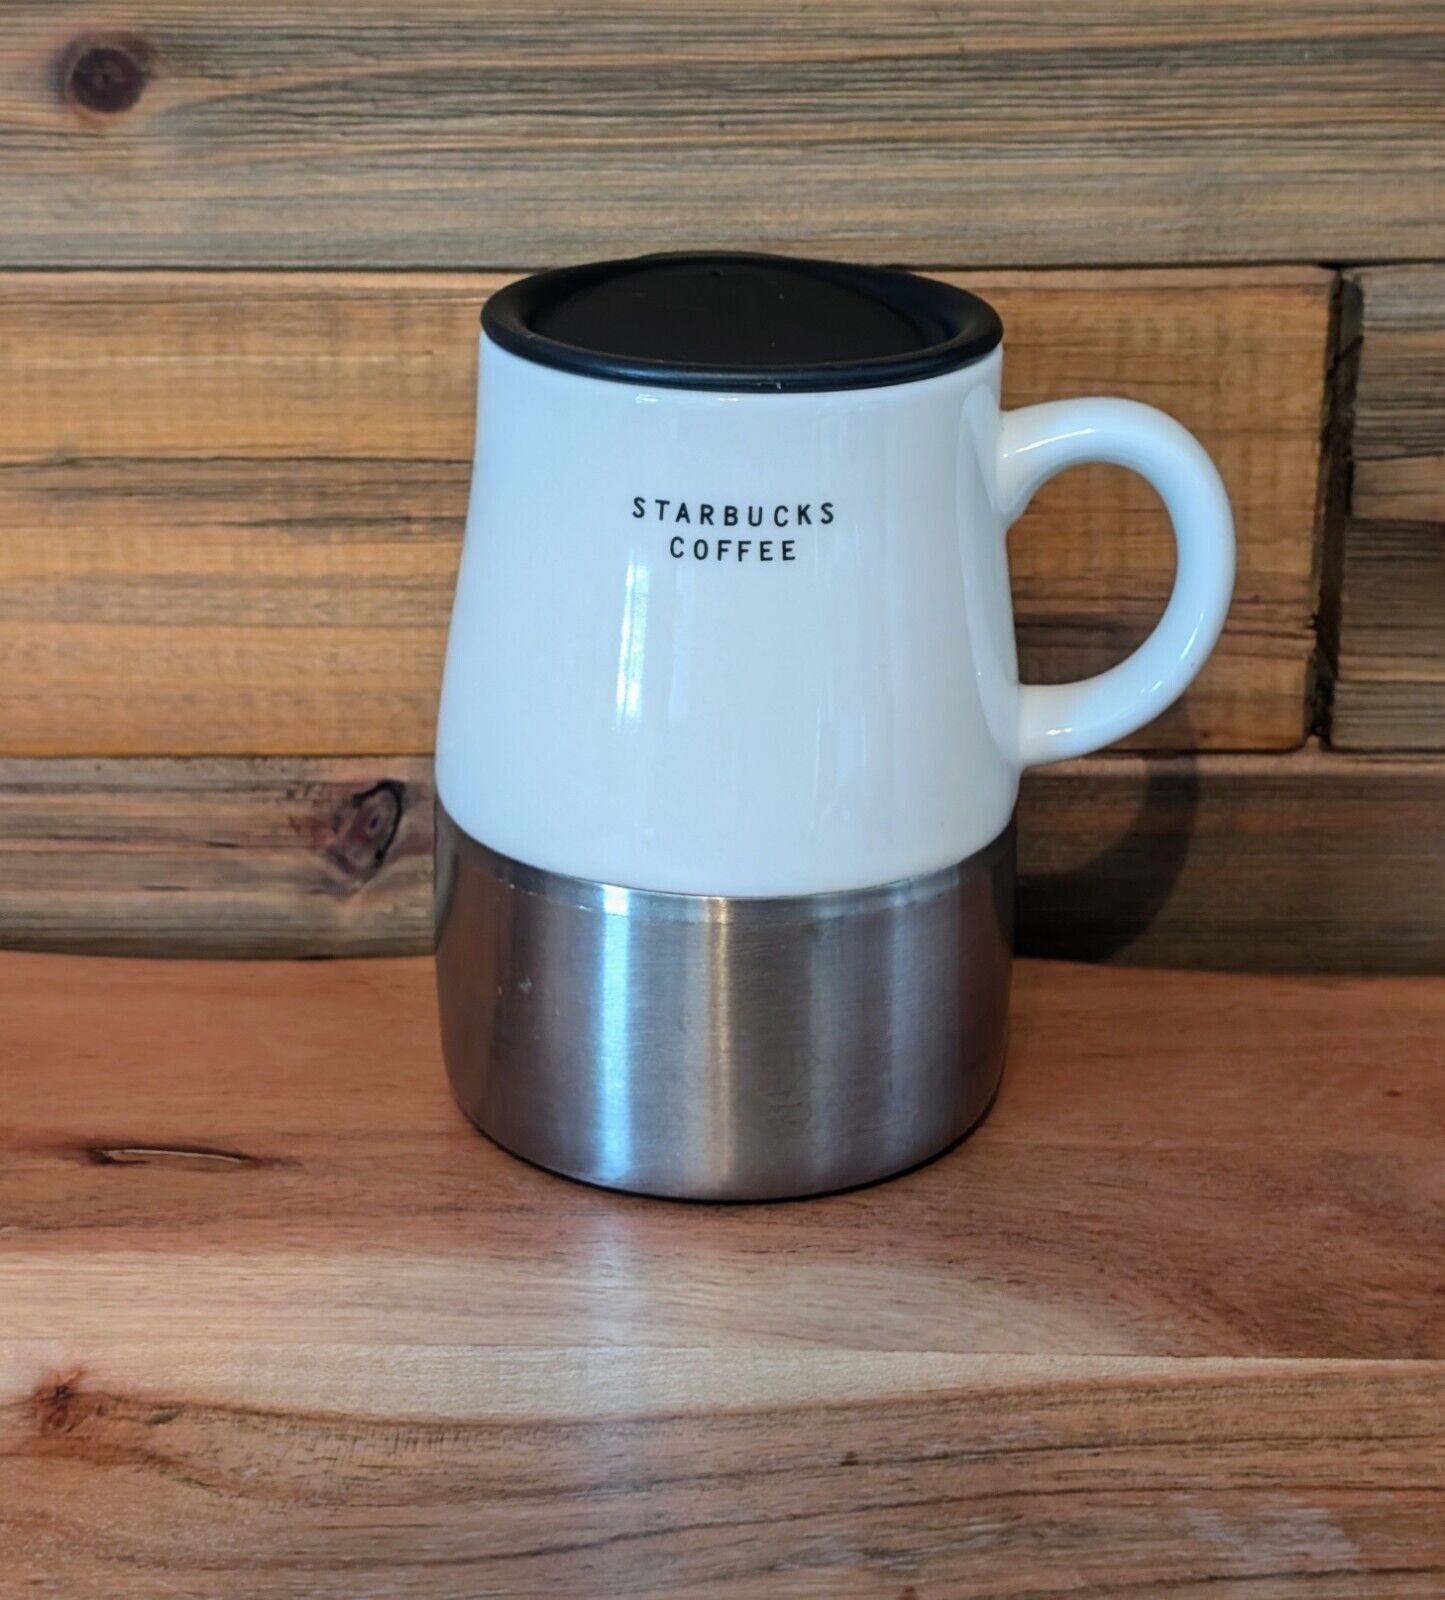 Starbucks Ceramic Stainless Steel Travel Coffee Mug Cup With Lid - 14 Oz -2004